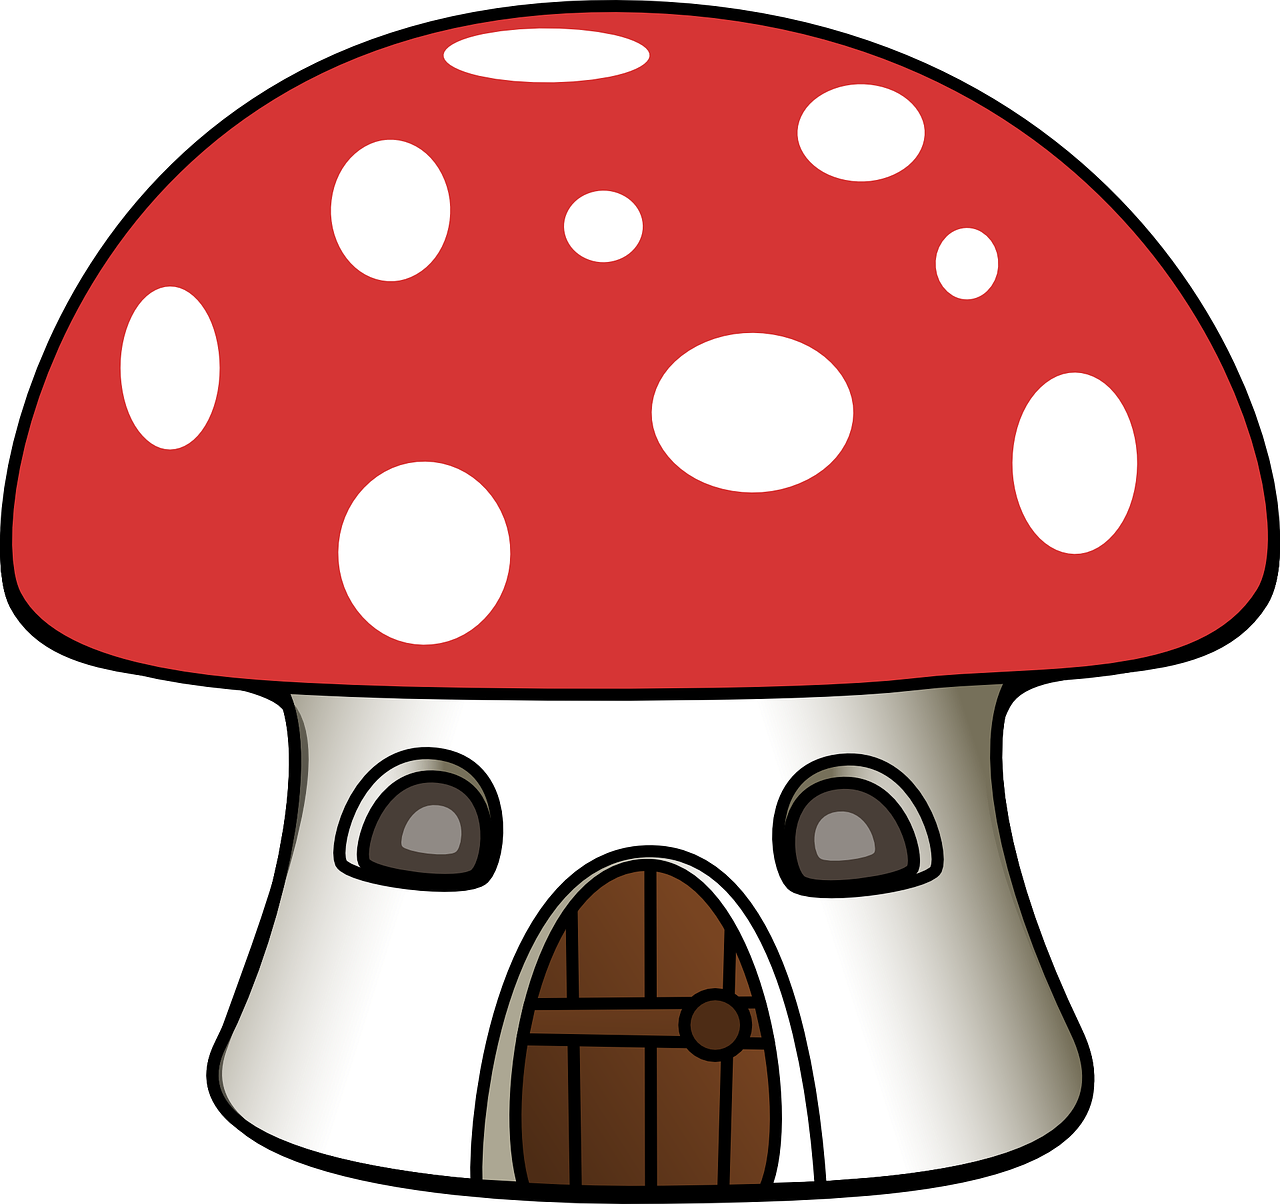 Red and white spot cartoon mushroom house